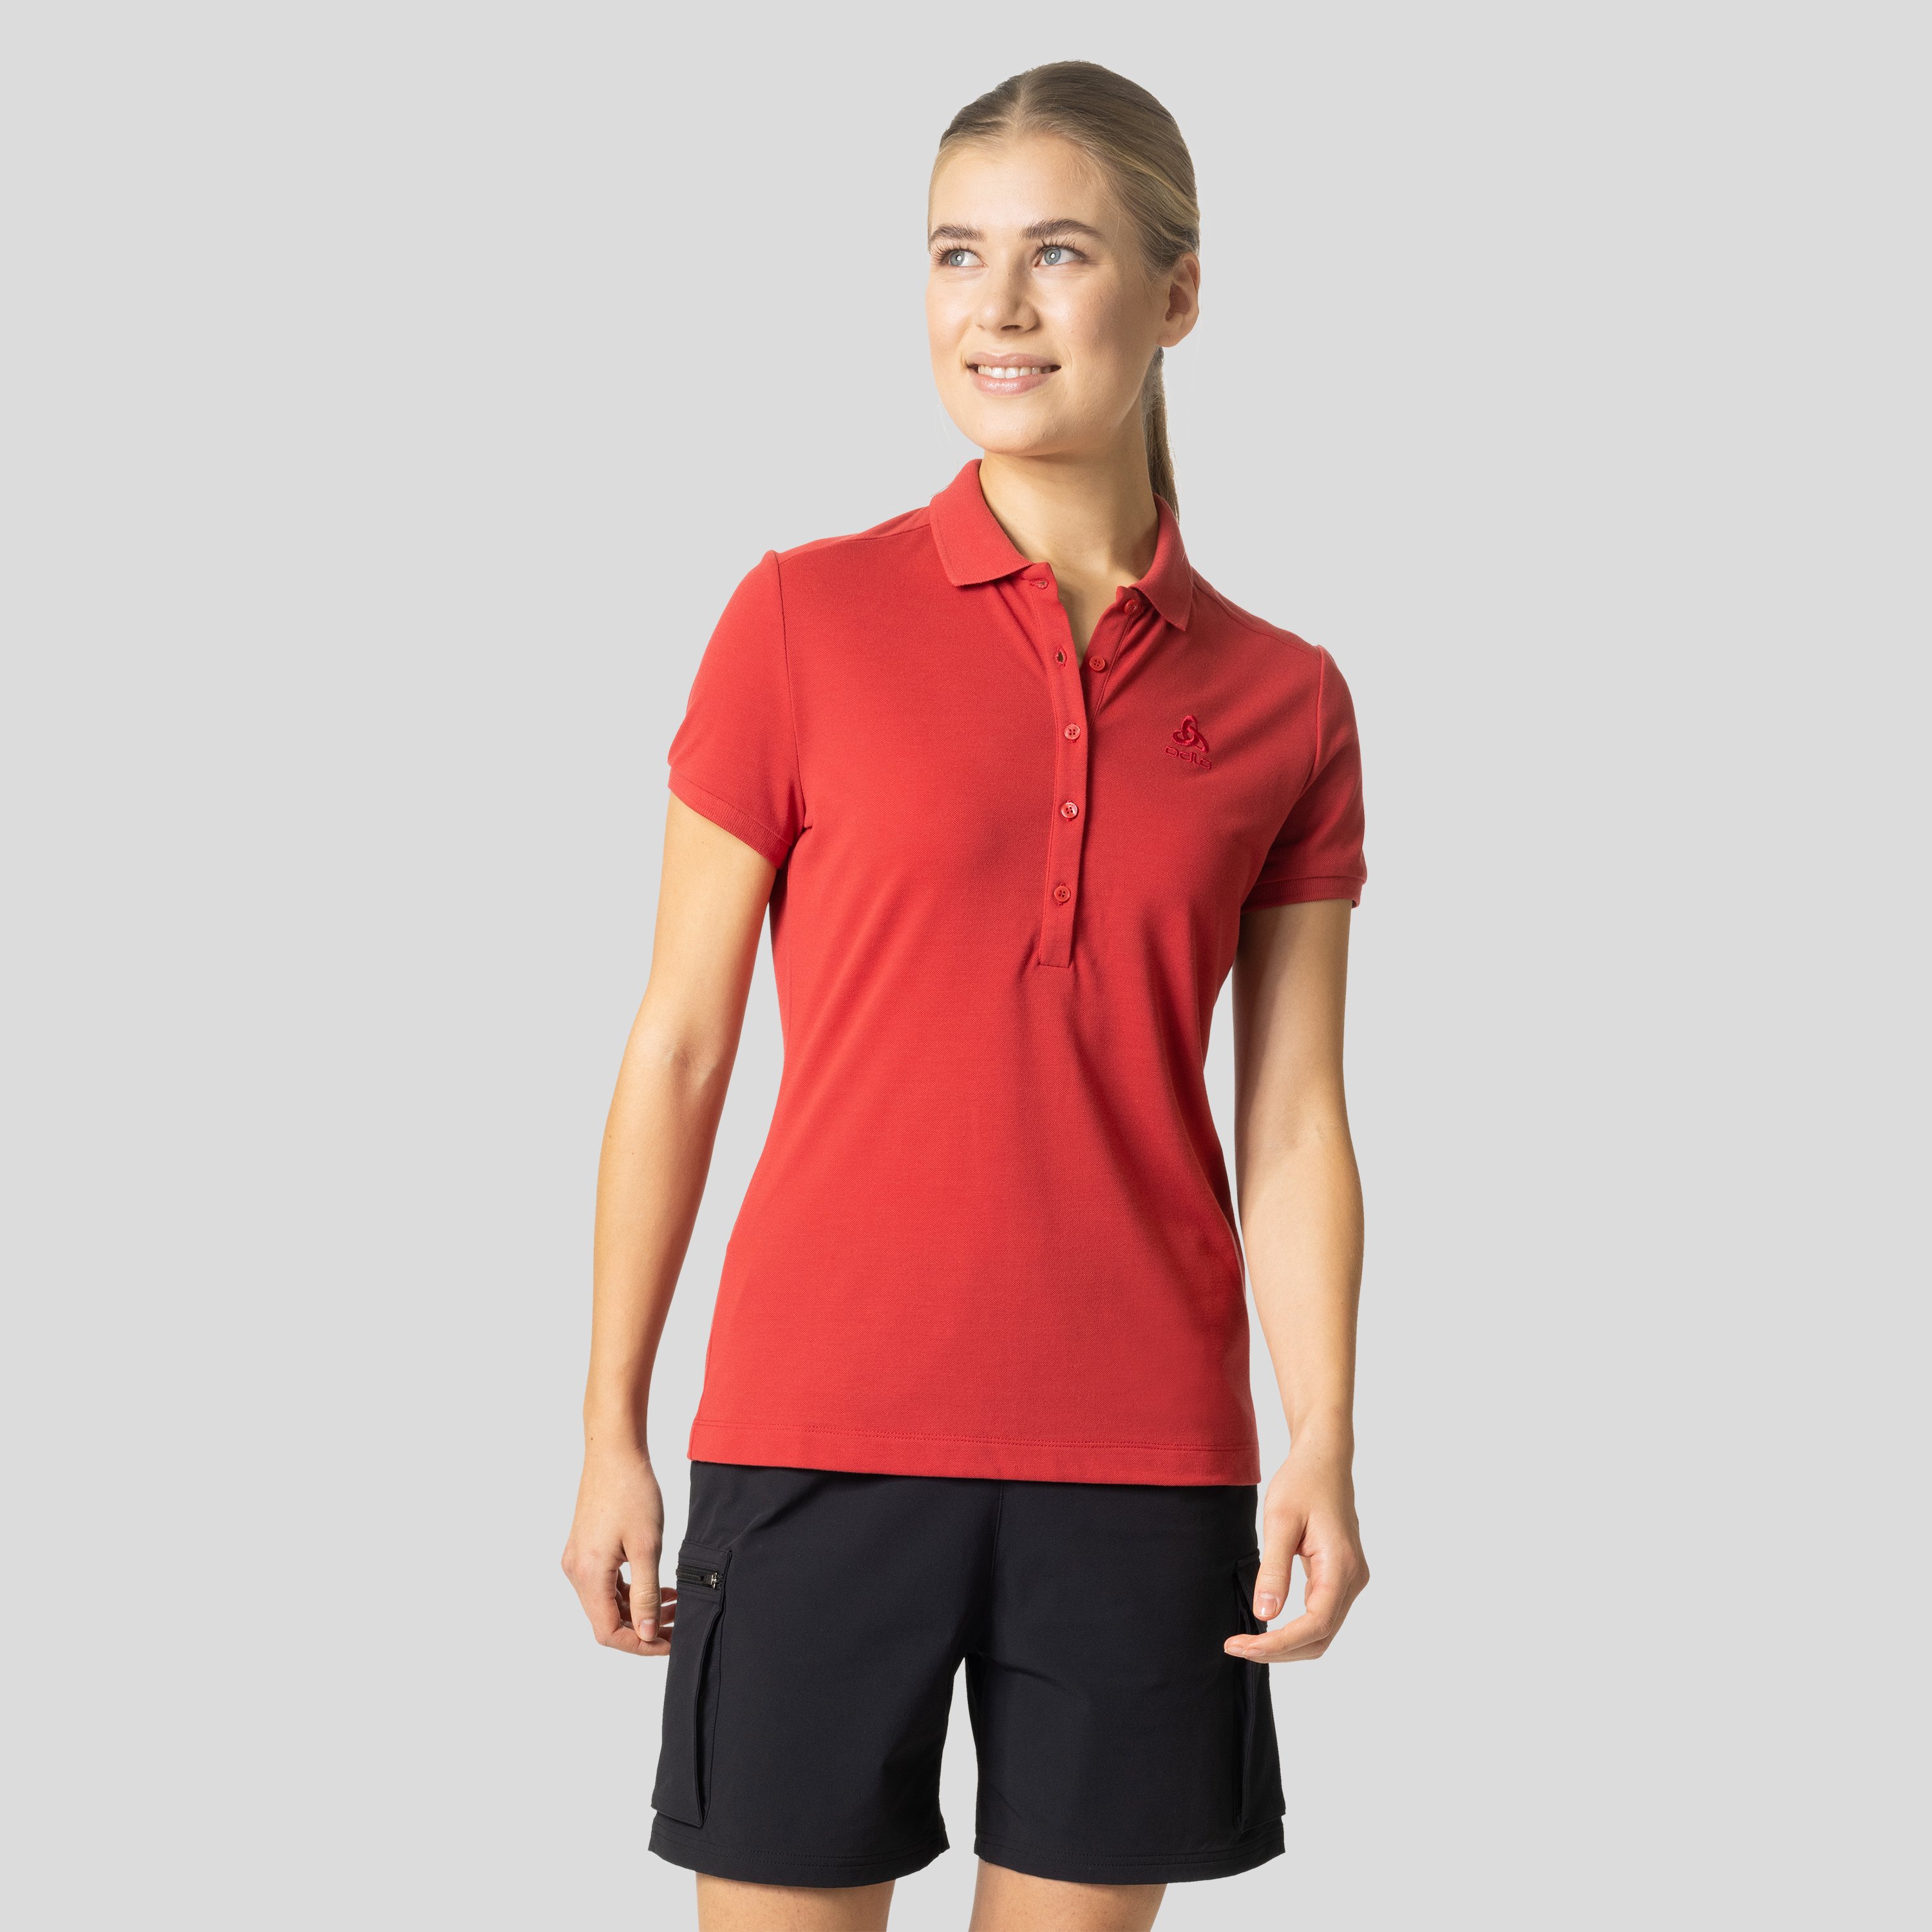 ODLO Concord Poloshirt für Damen, XS, rot